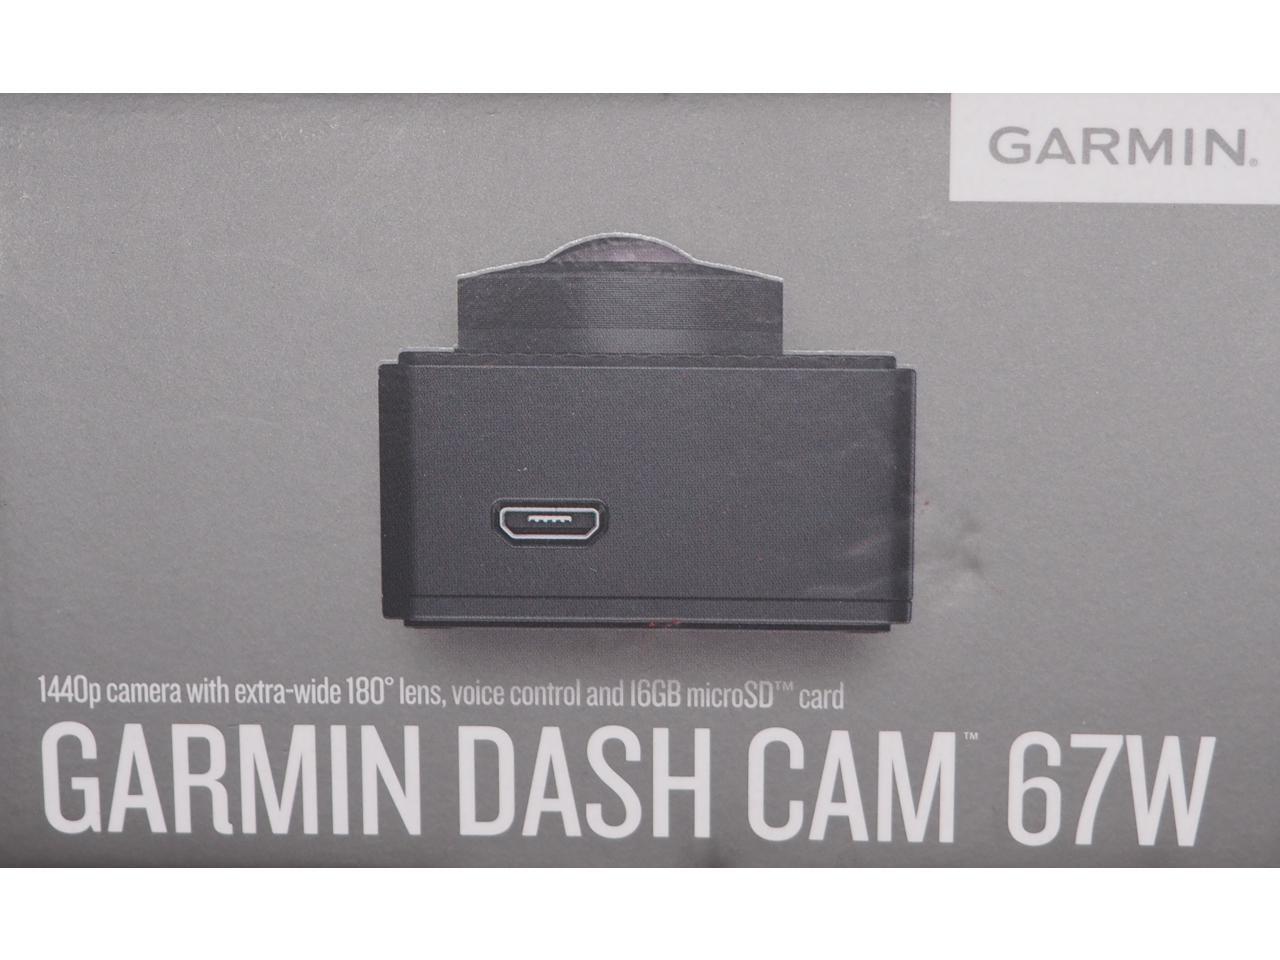 Garmin 67W 1440p Dash Cam, Black #010-02505-05 - image 3 of 21